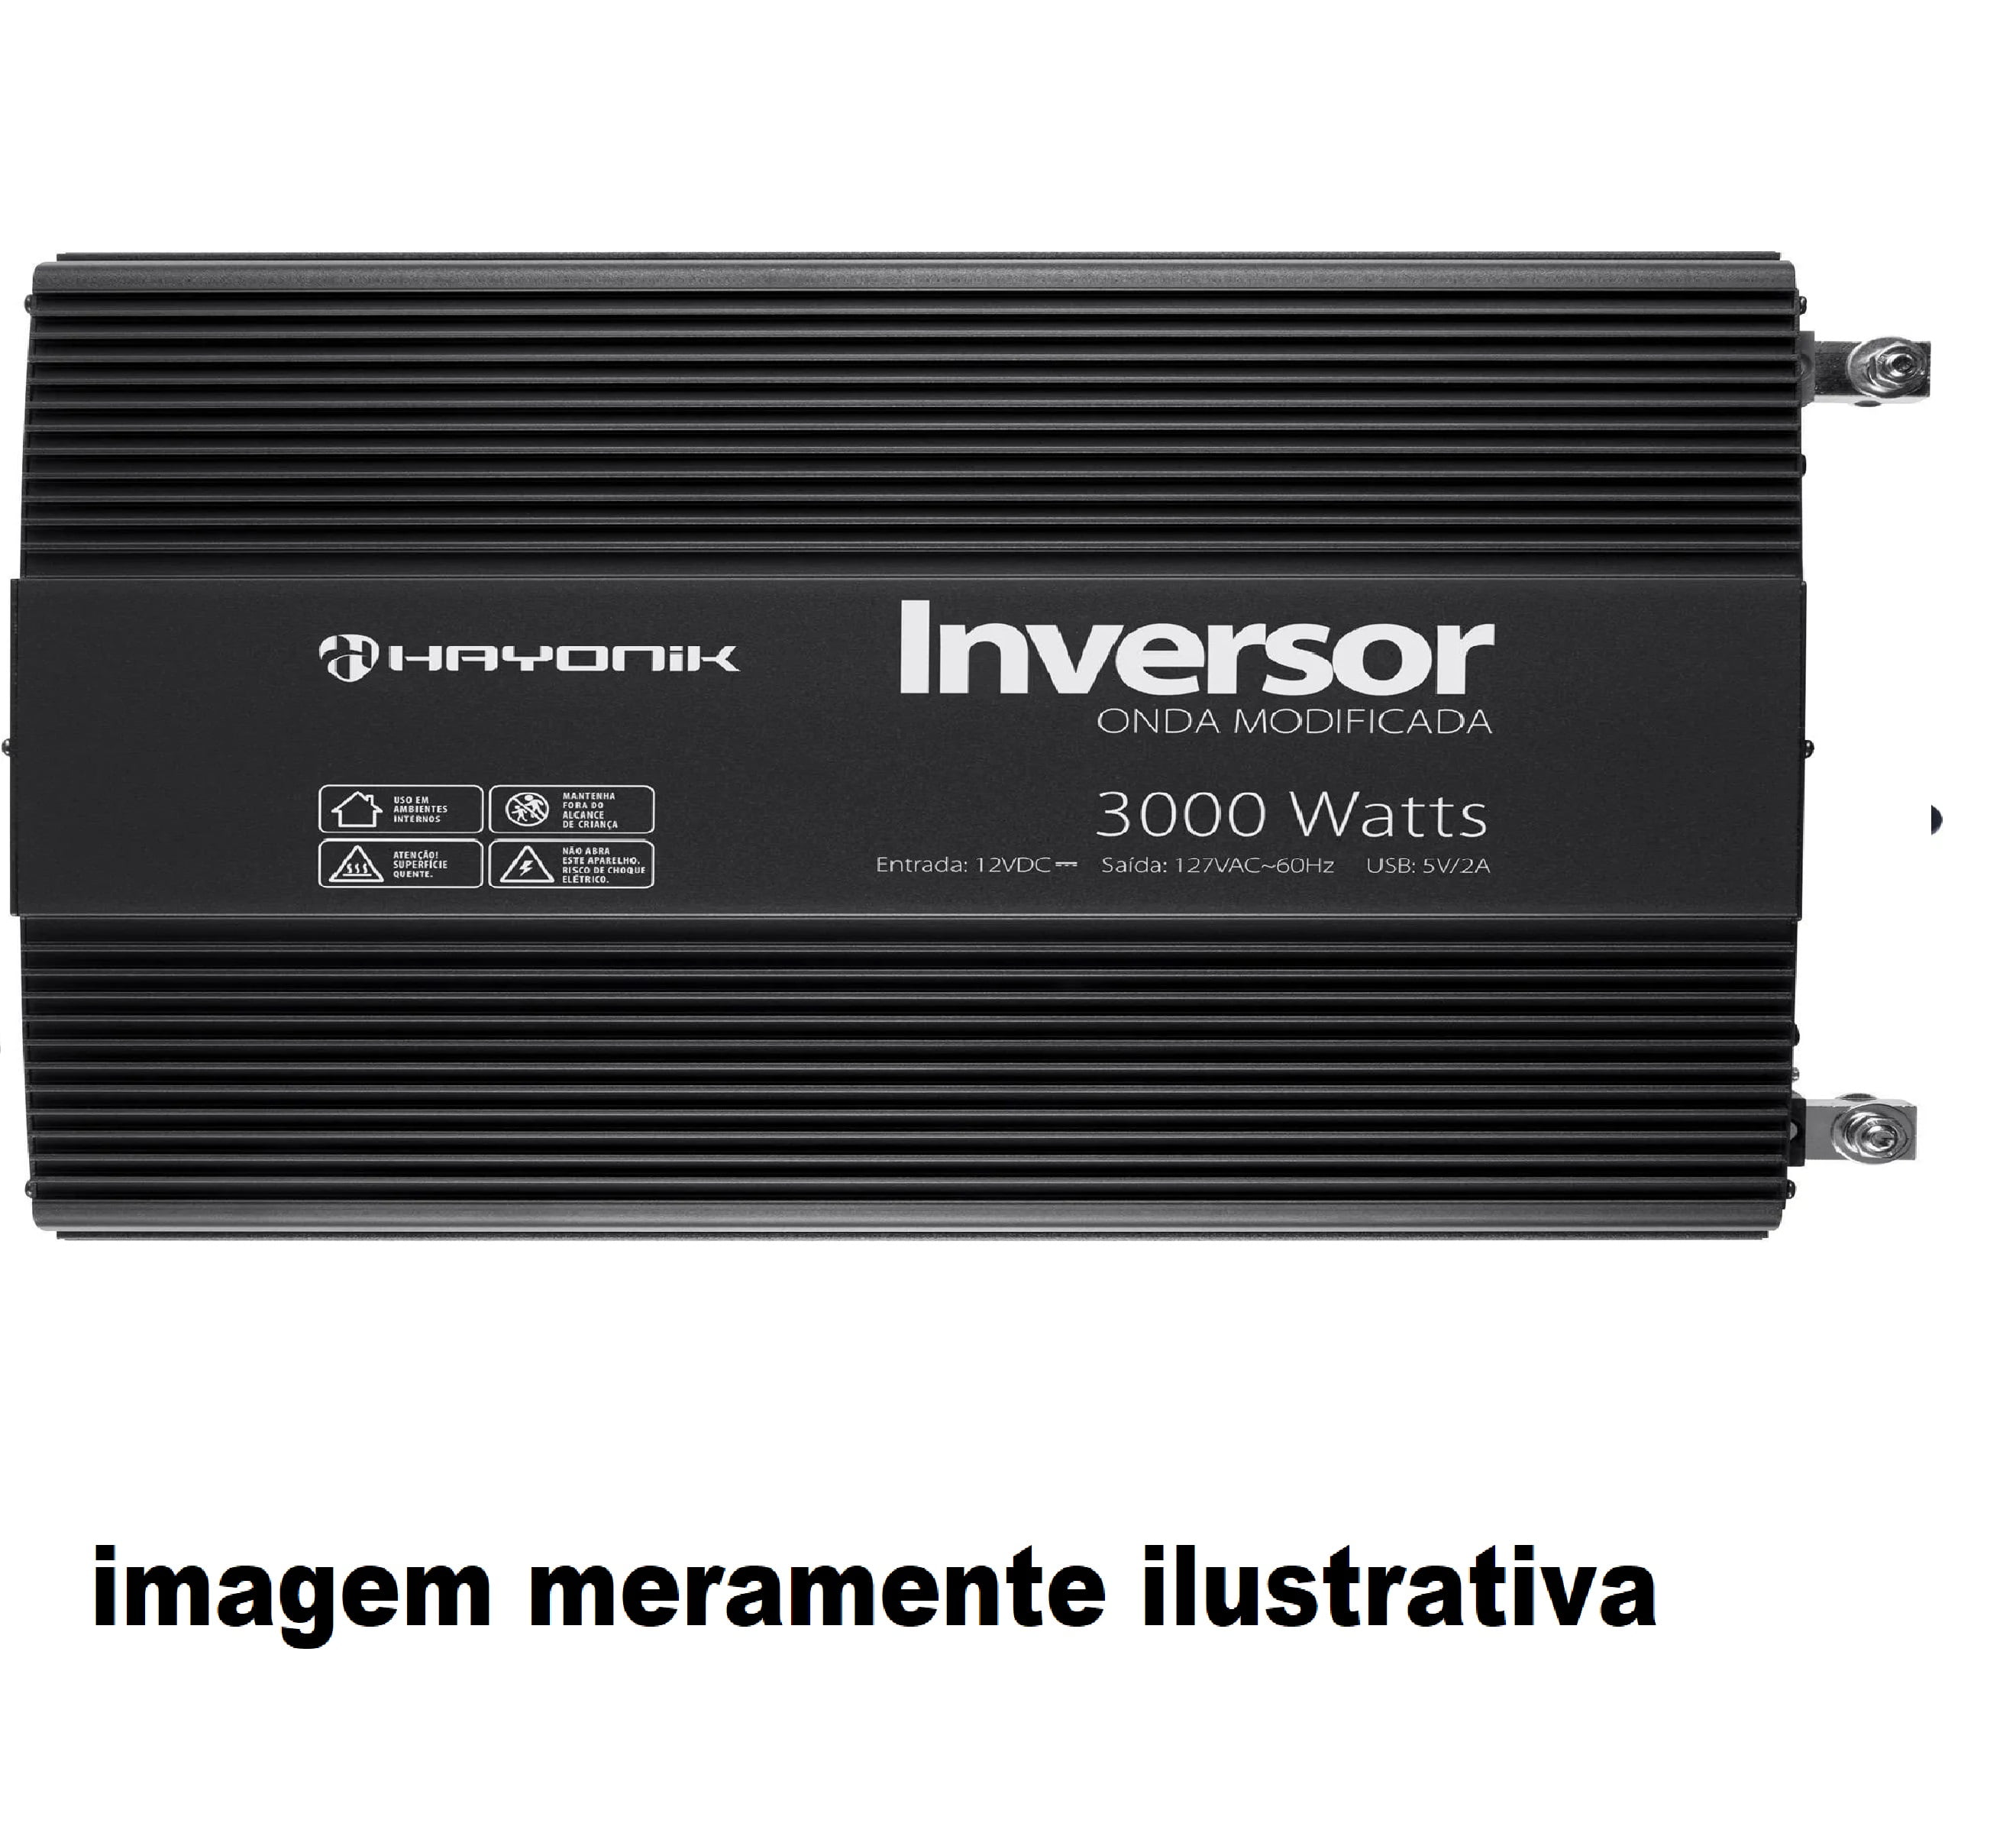 Inversor de Onda Modificada 3000W 12VDC/127V PW12-1 HAYONIK